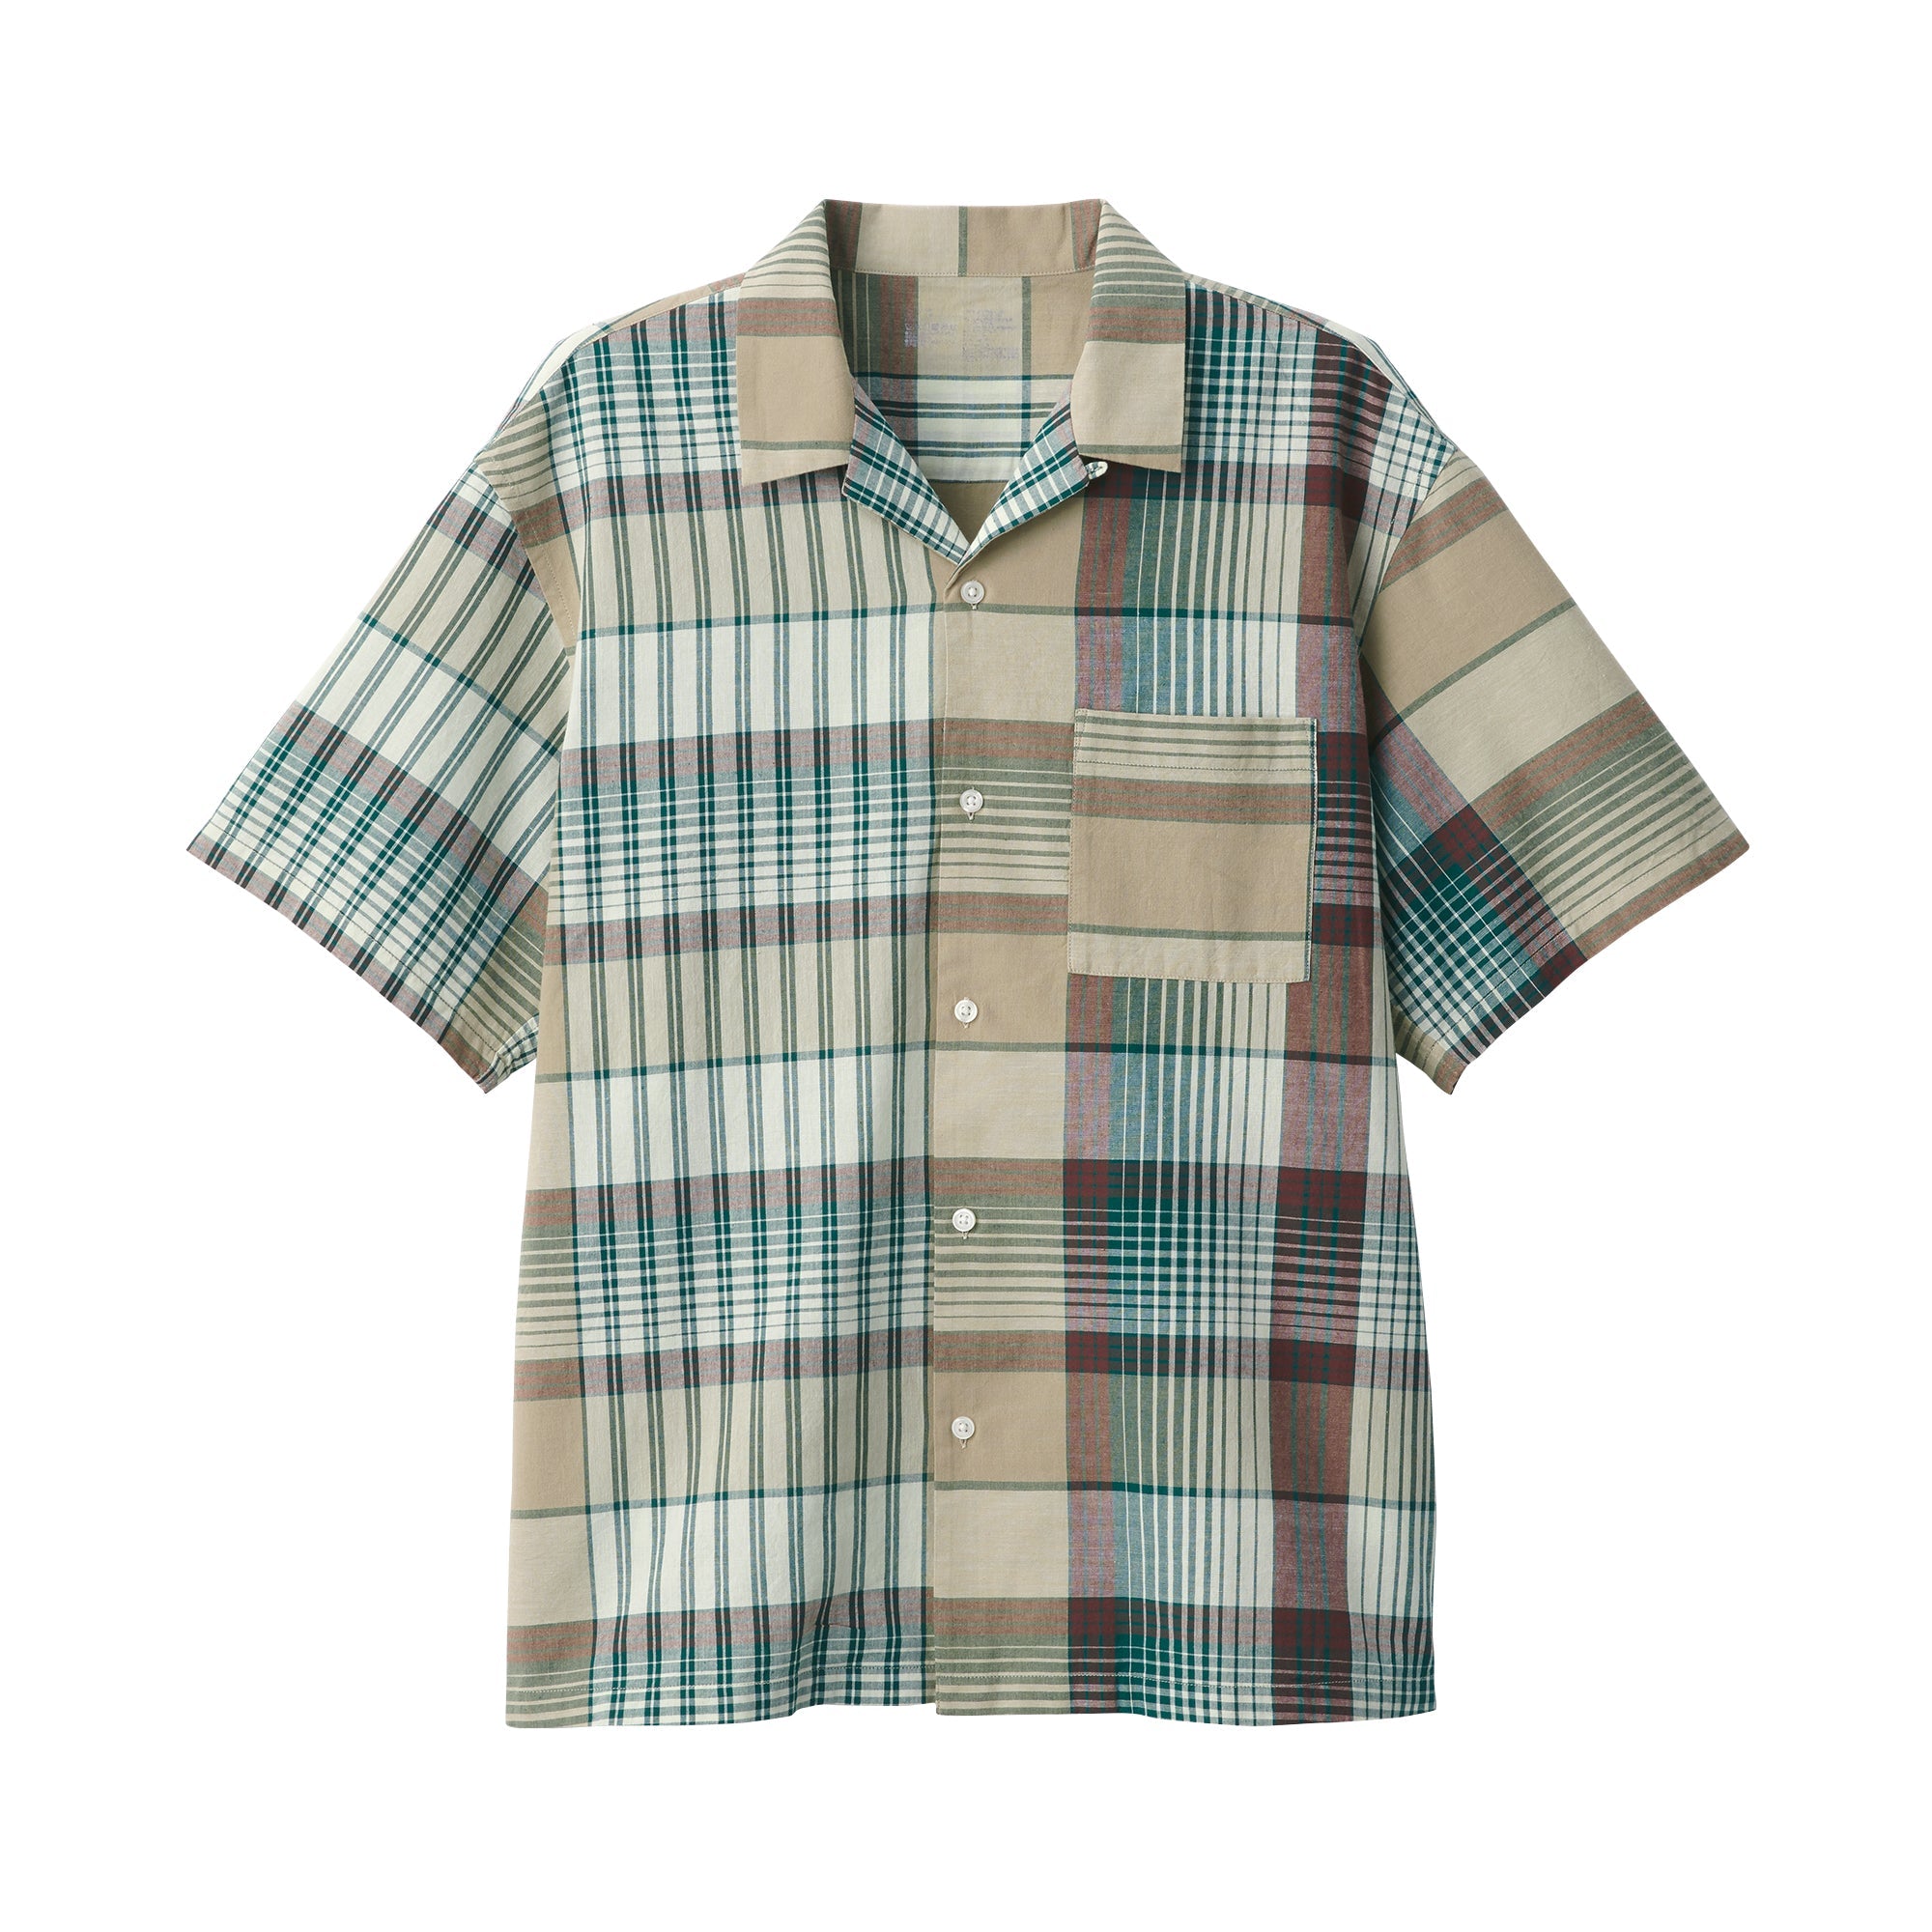 Men's Madras Check Open Collar Short Sleeve Shirt